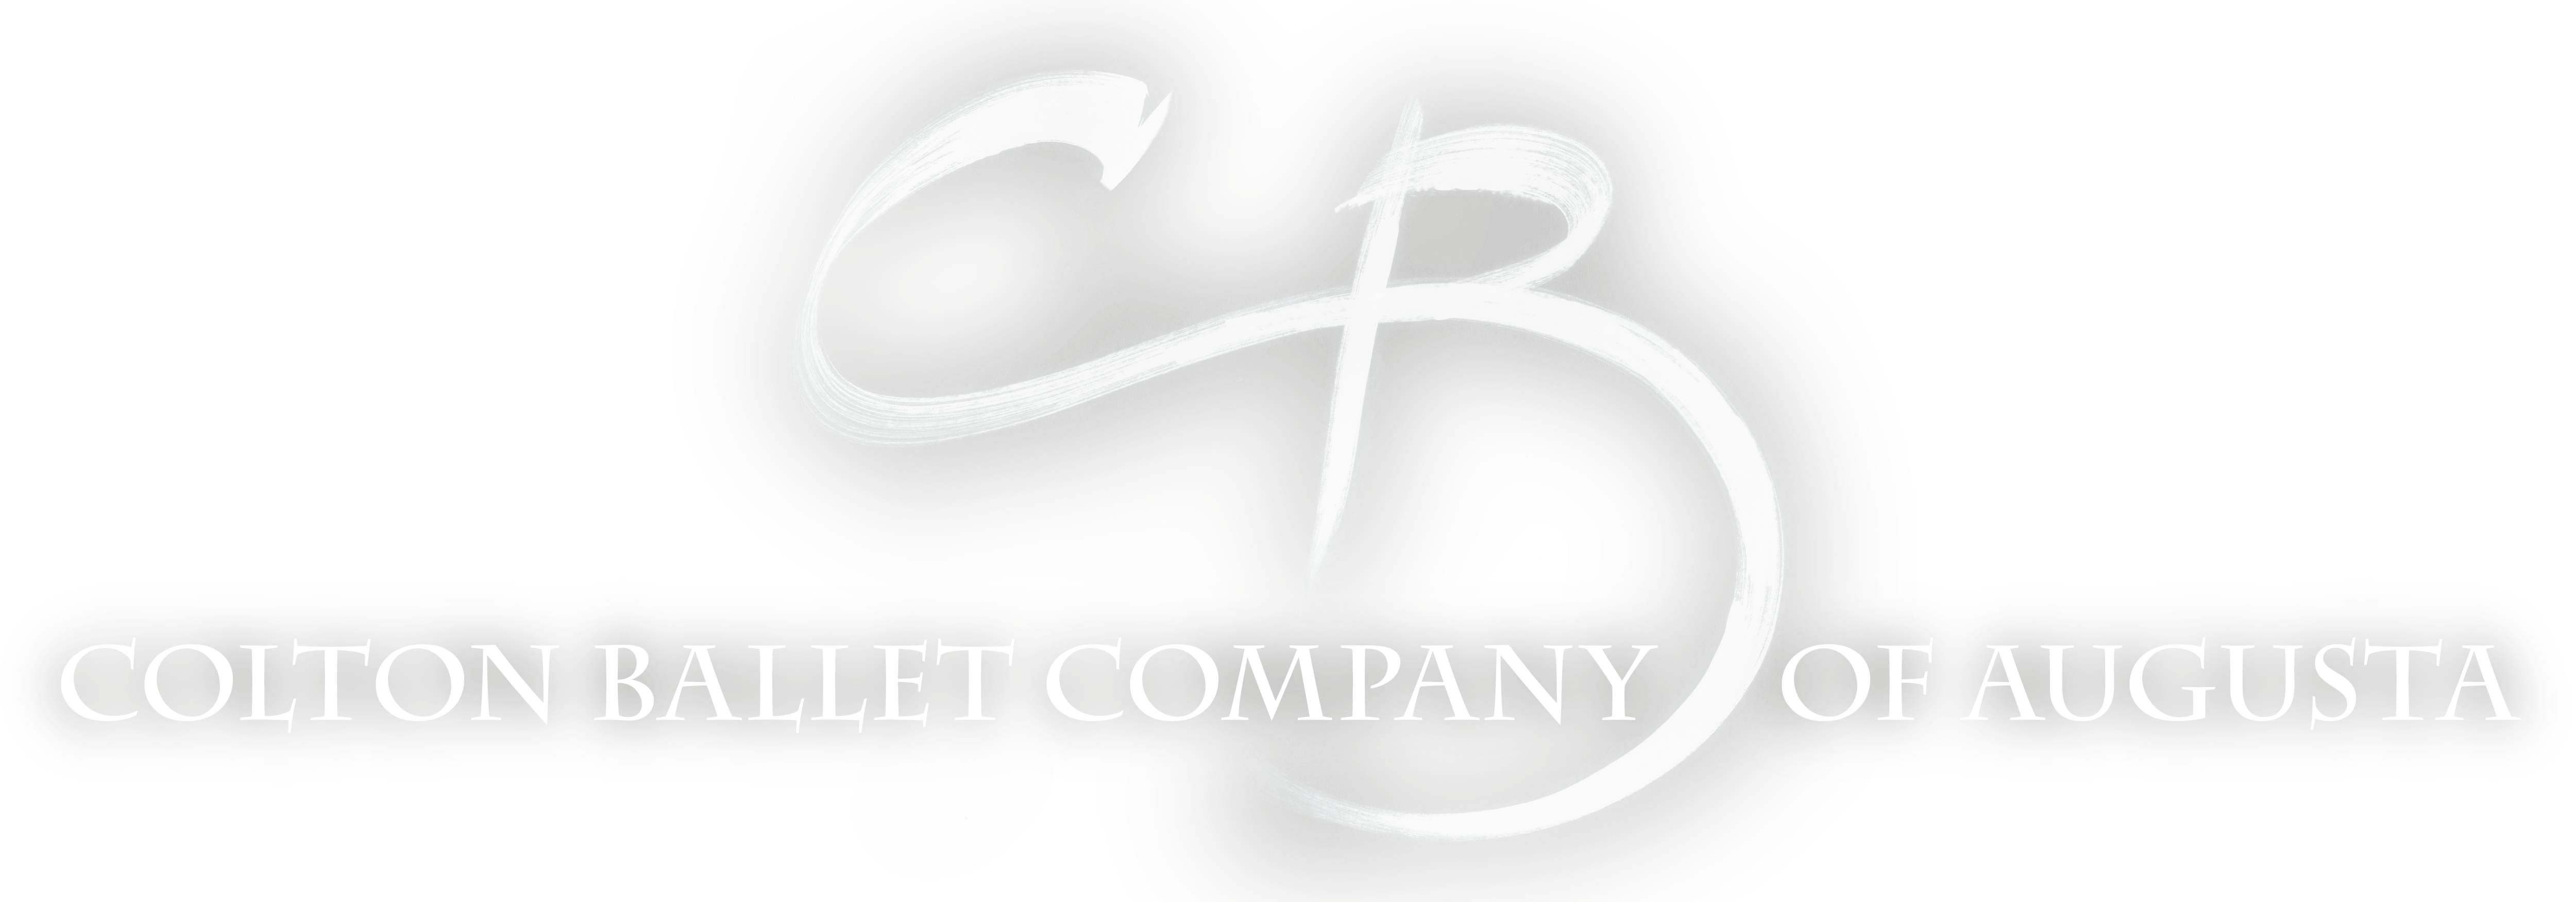 Colton Ballet Company logo